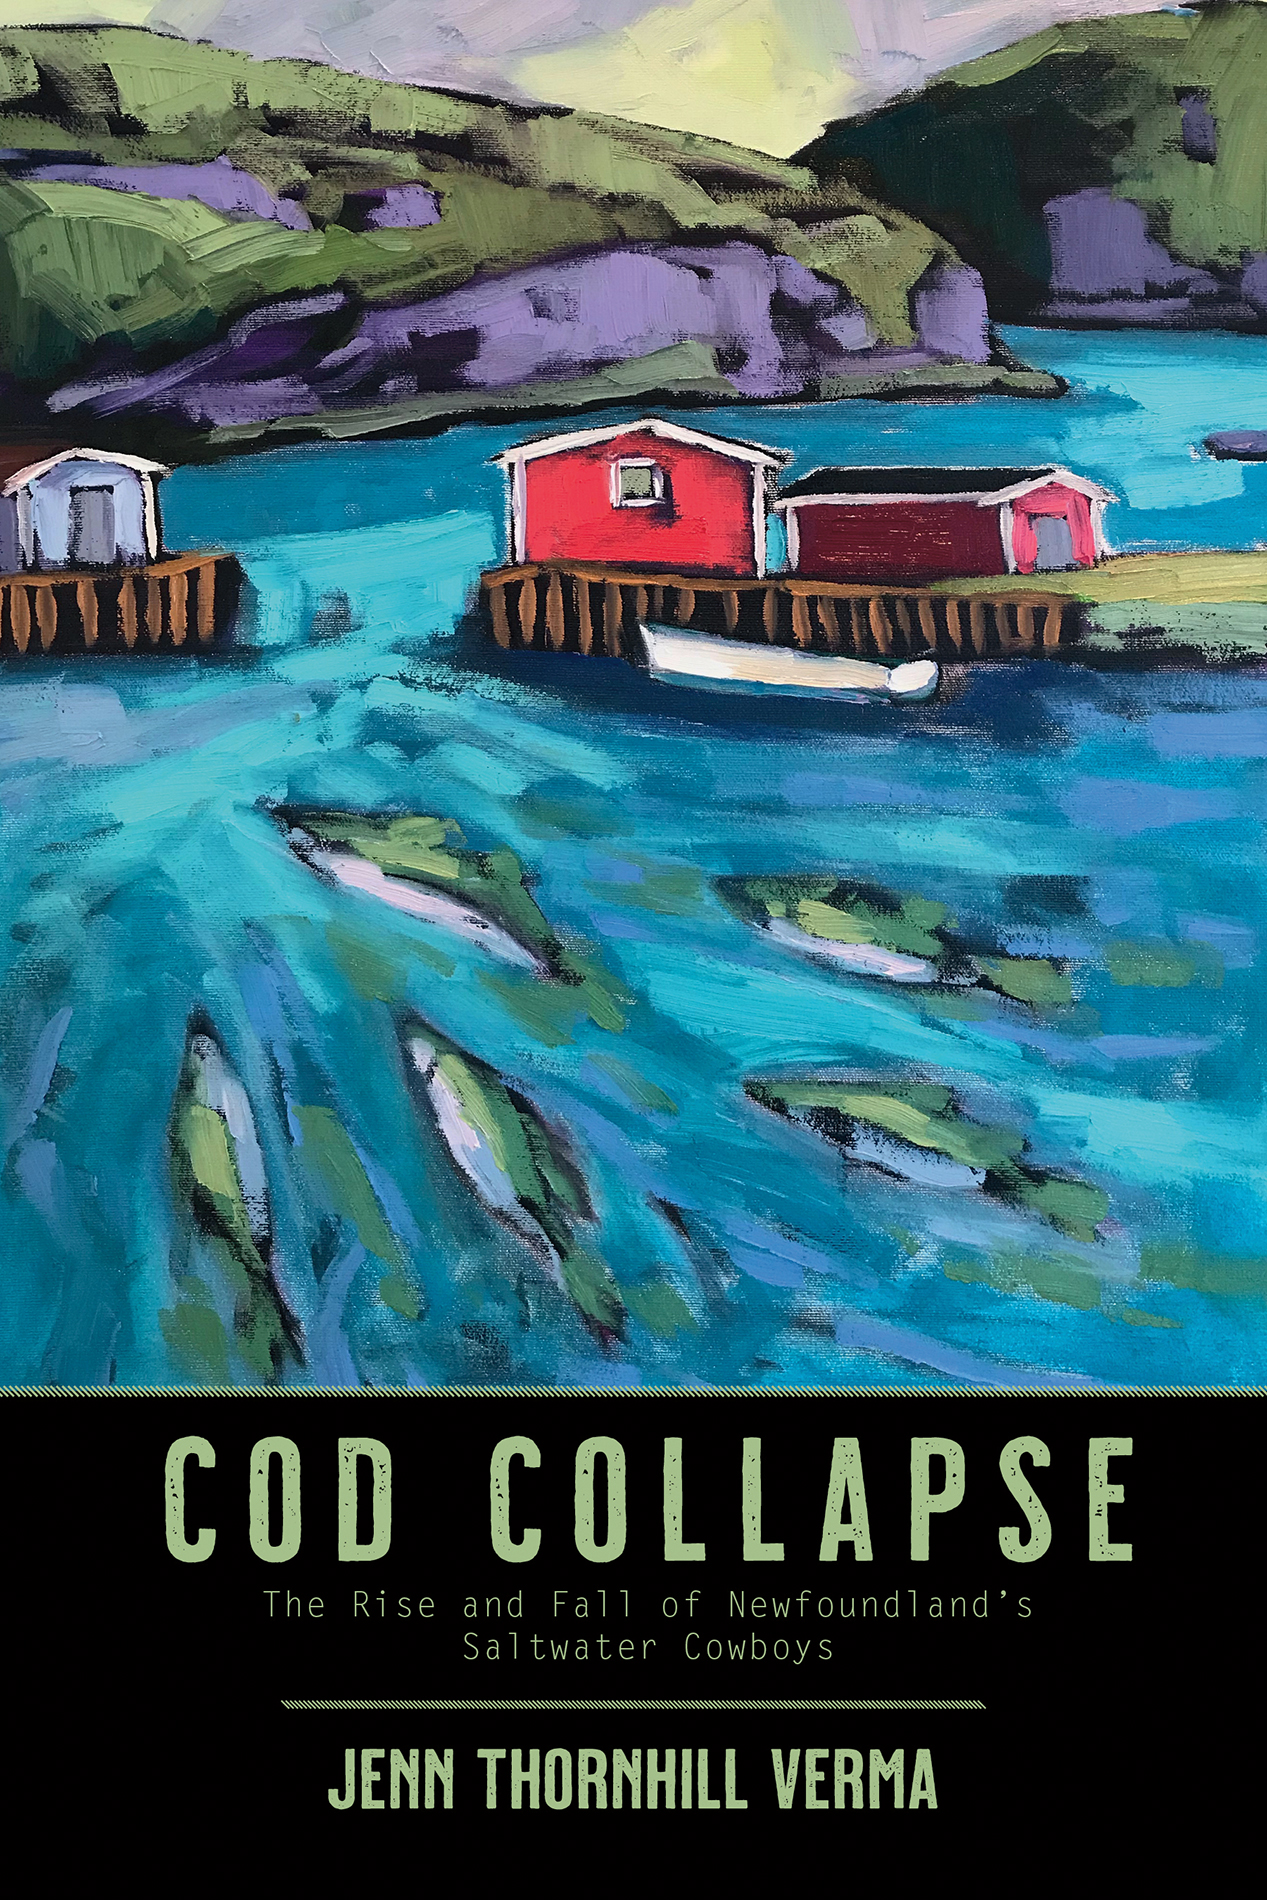 Cod Collapse